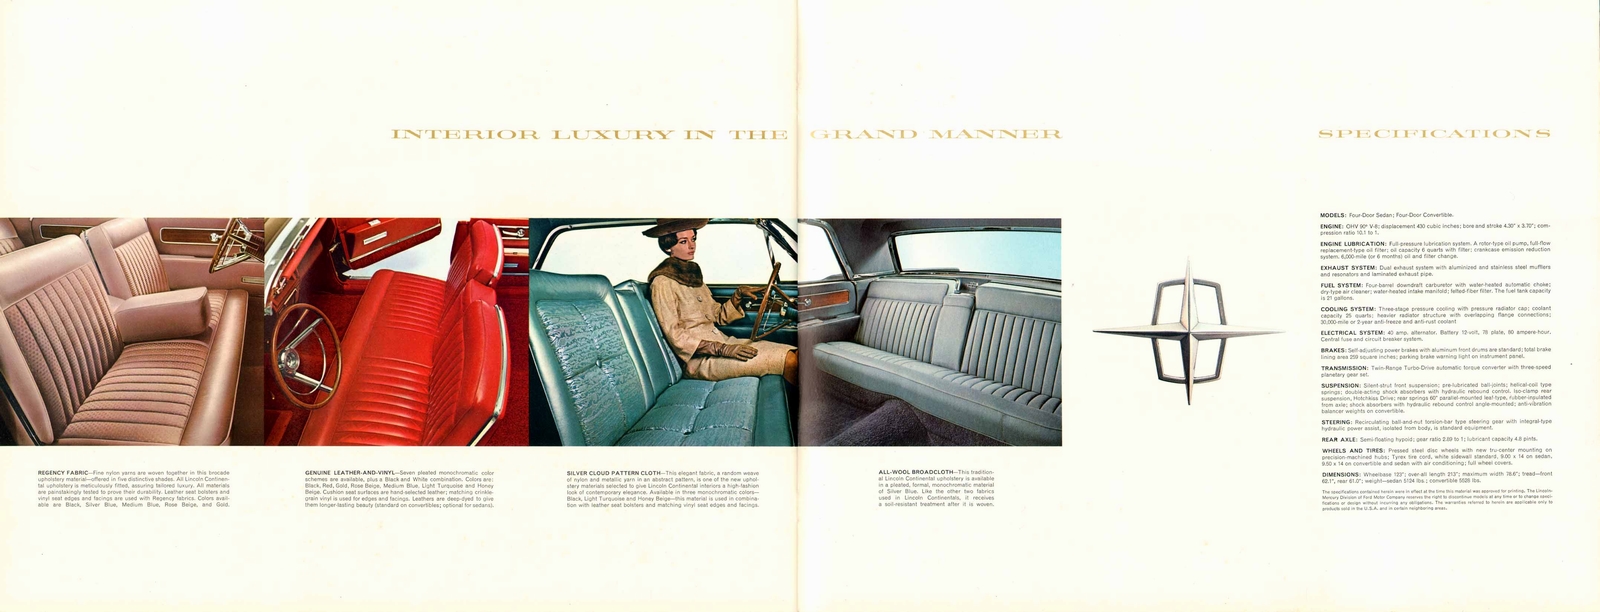 n_1963 Lincoln Continental Prestige-22-23.jpg